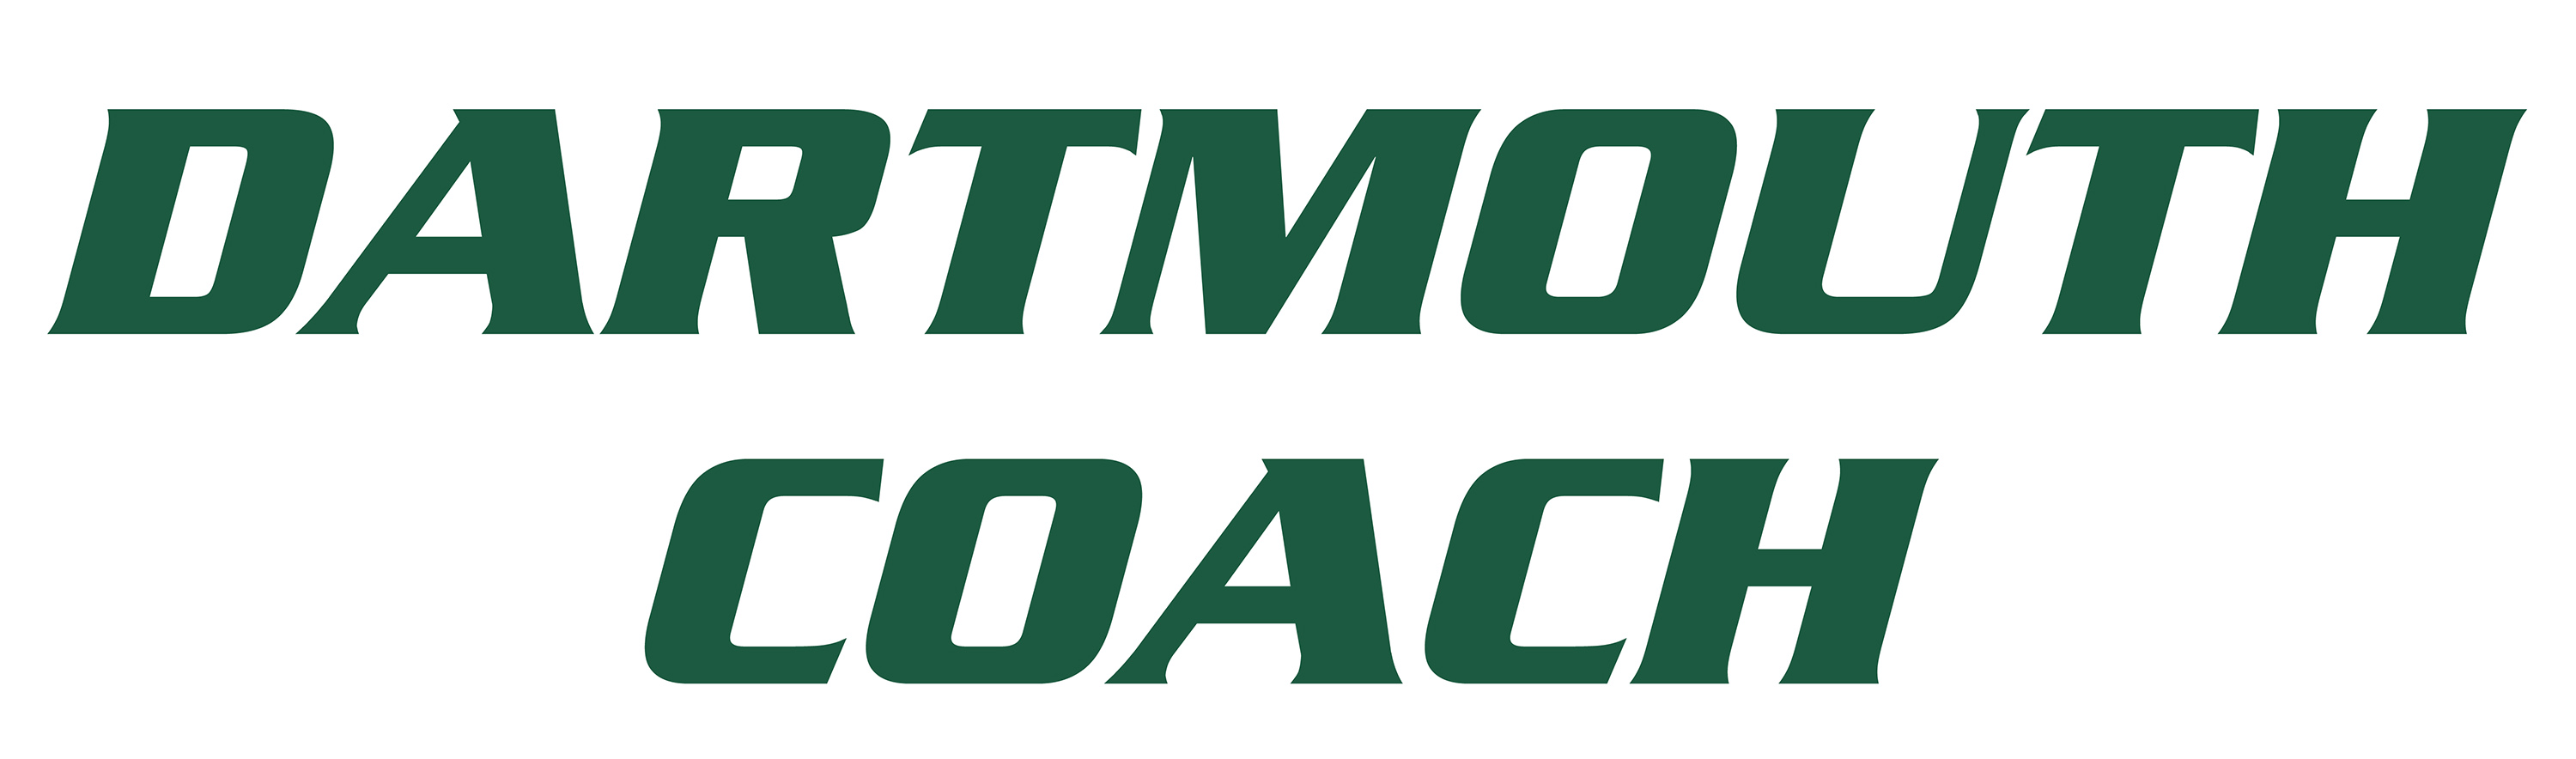 Dartmouth Transportation Company/Dartmouth Coach